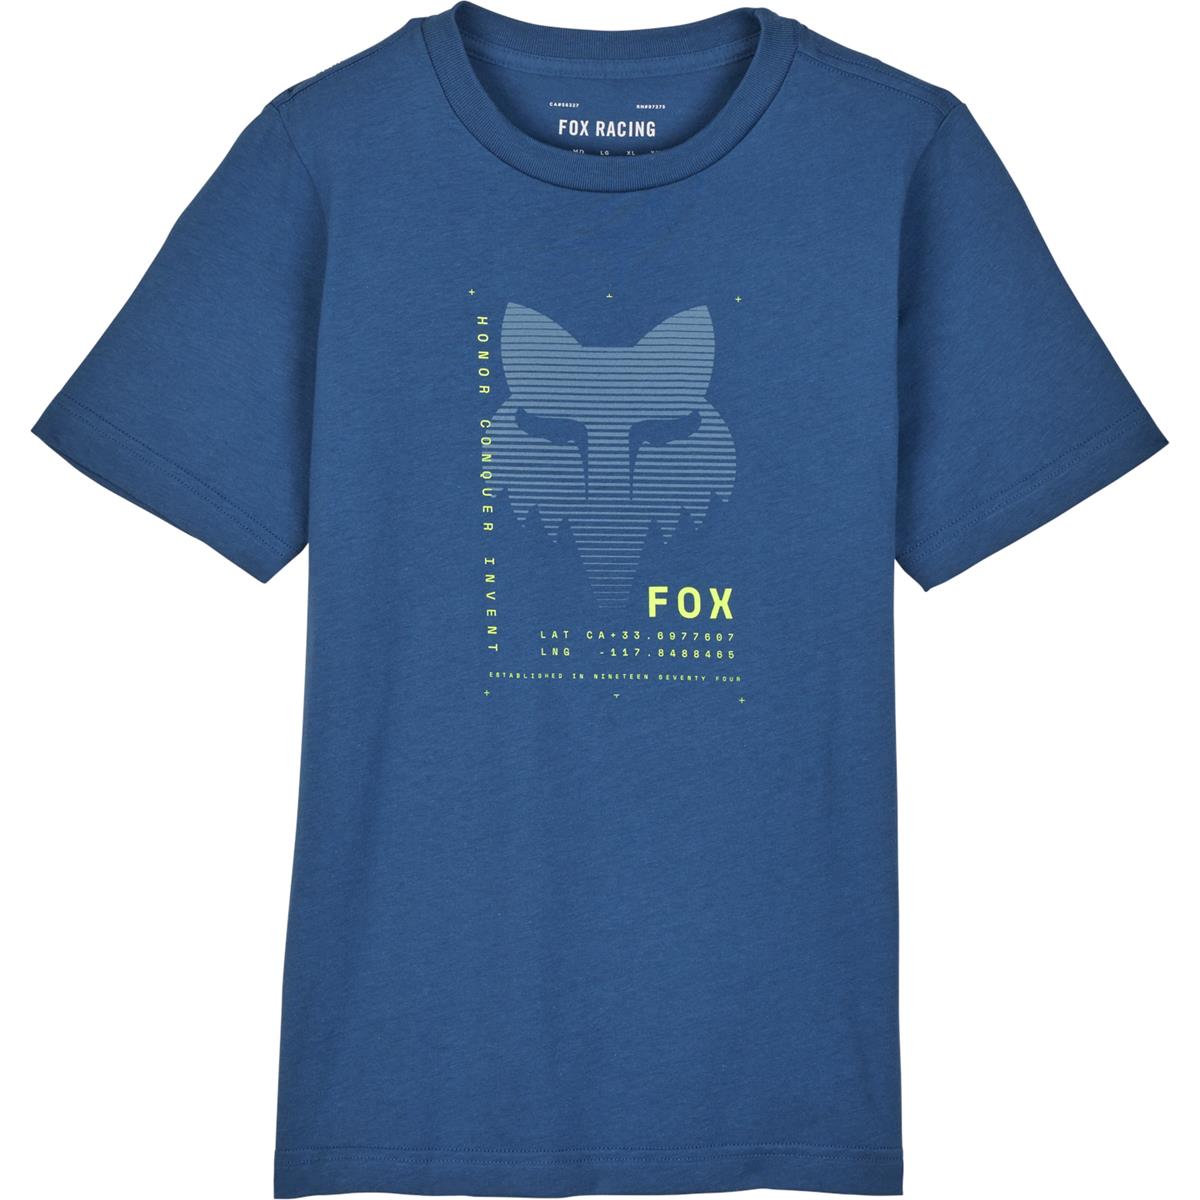 Fox Bimbo T-Shirt Race Dispute - Indigo